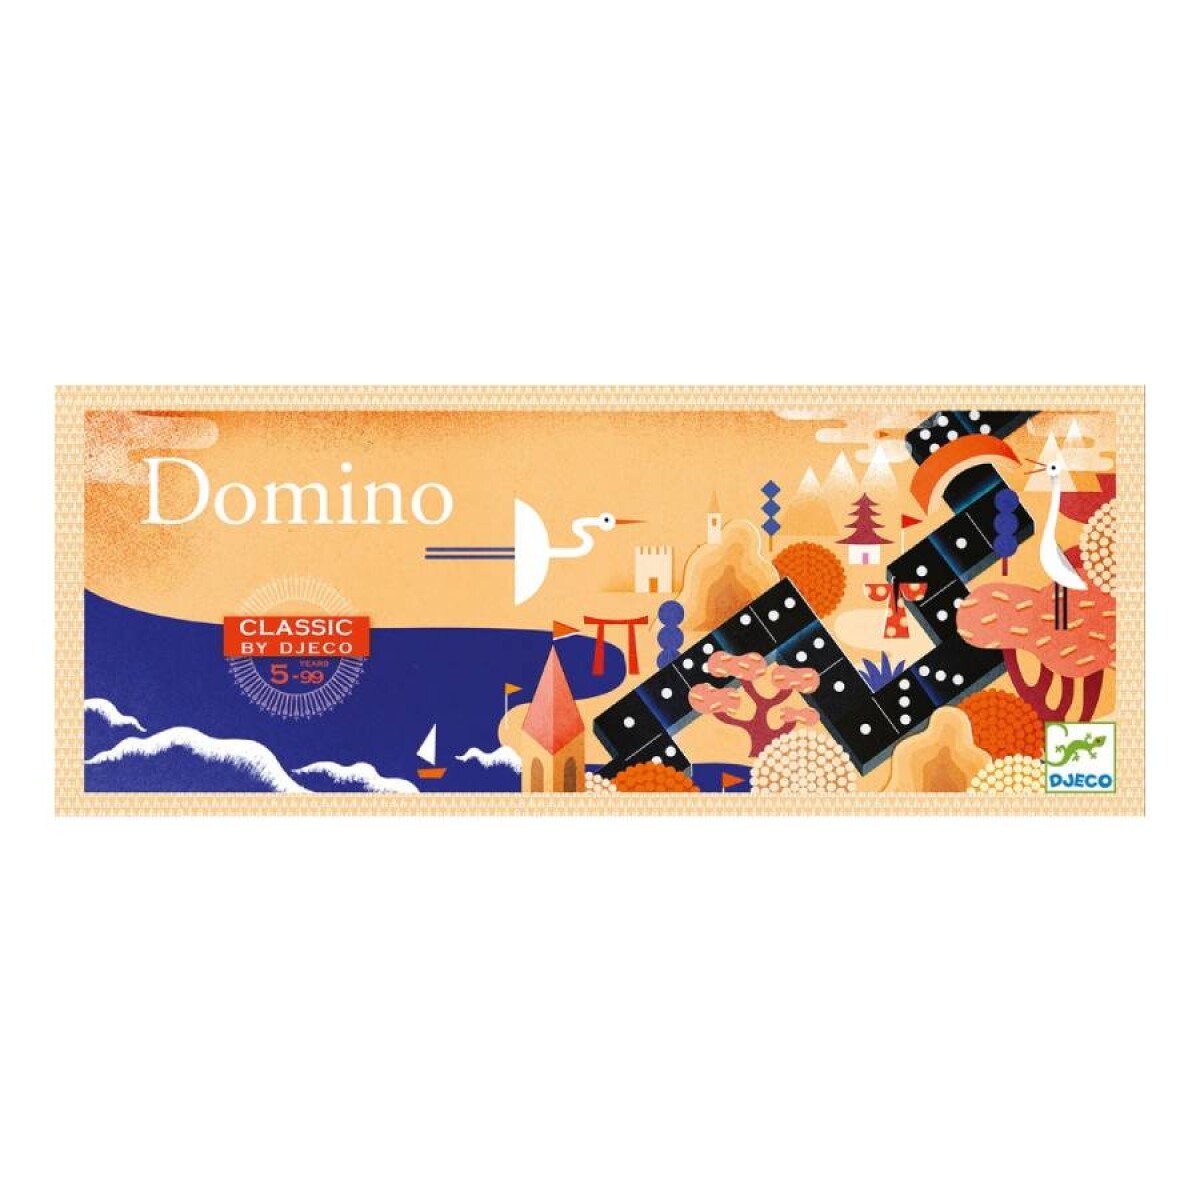 Domino Classic by Djeco 